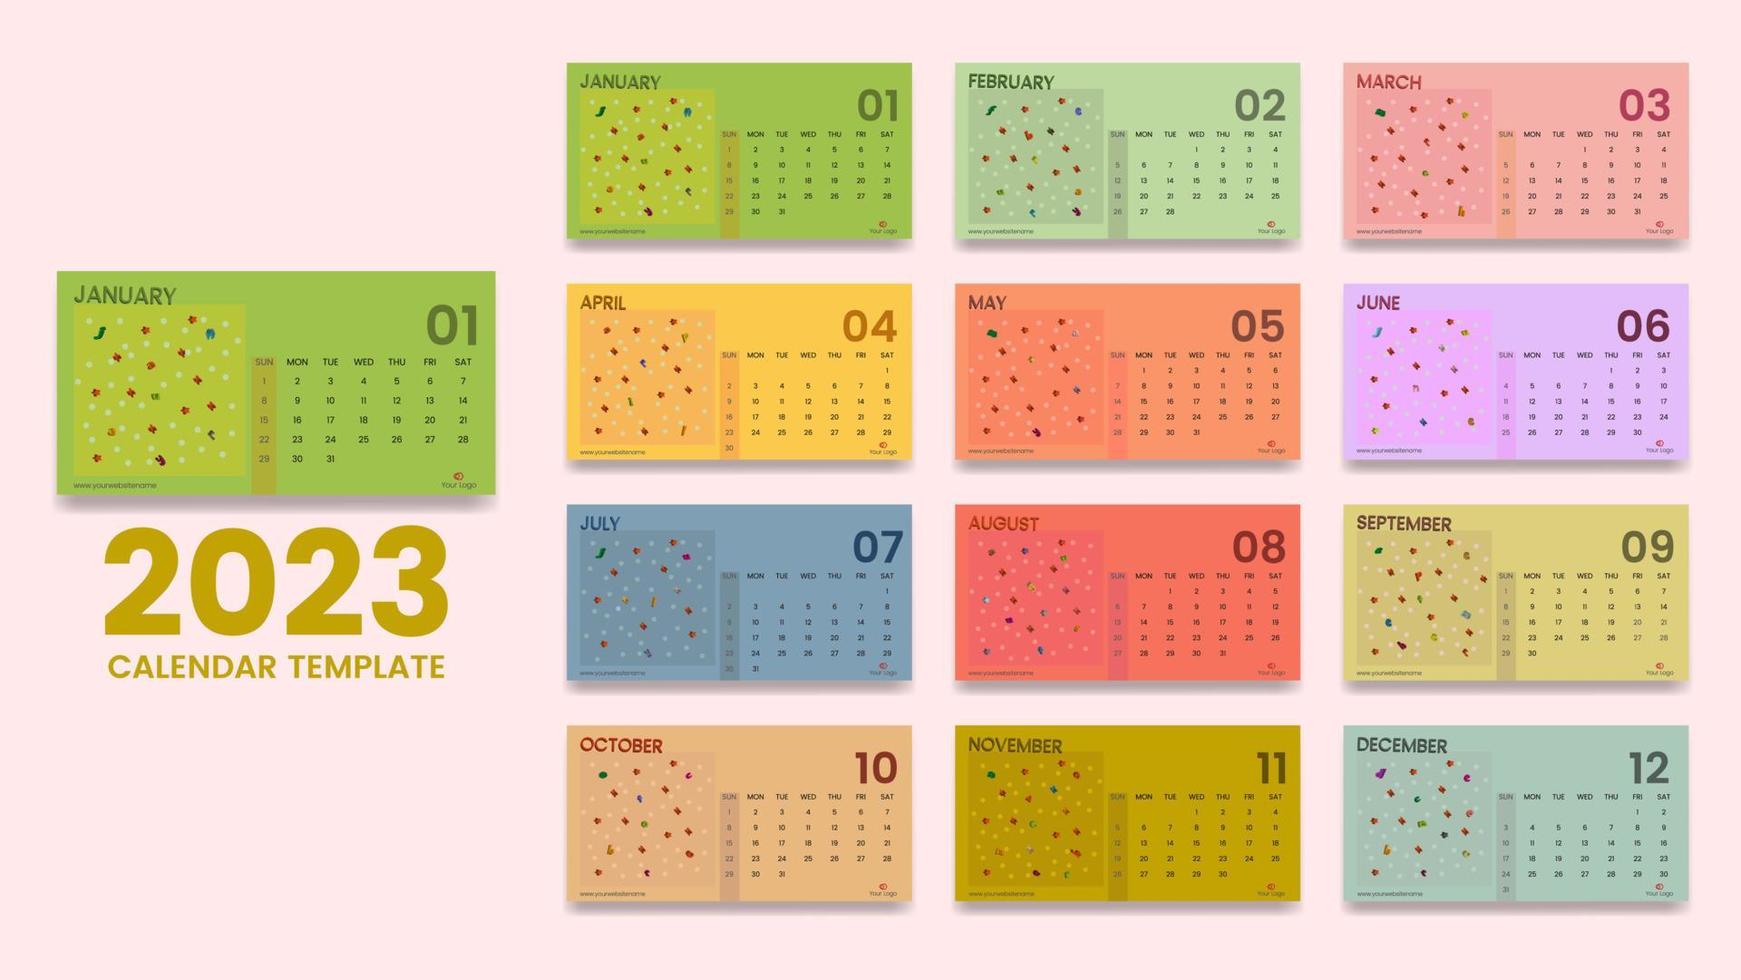 calendario de escritorio 2023 o calendario semanal mensual plantilla de diseño de calendario colorido de año nuevo vector